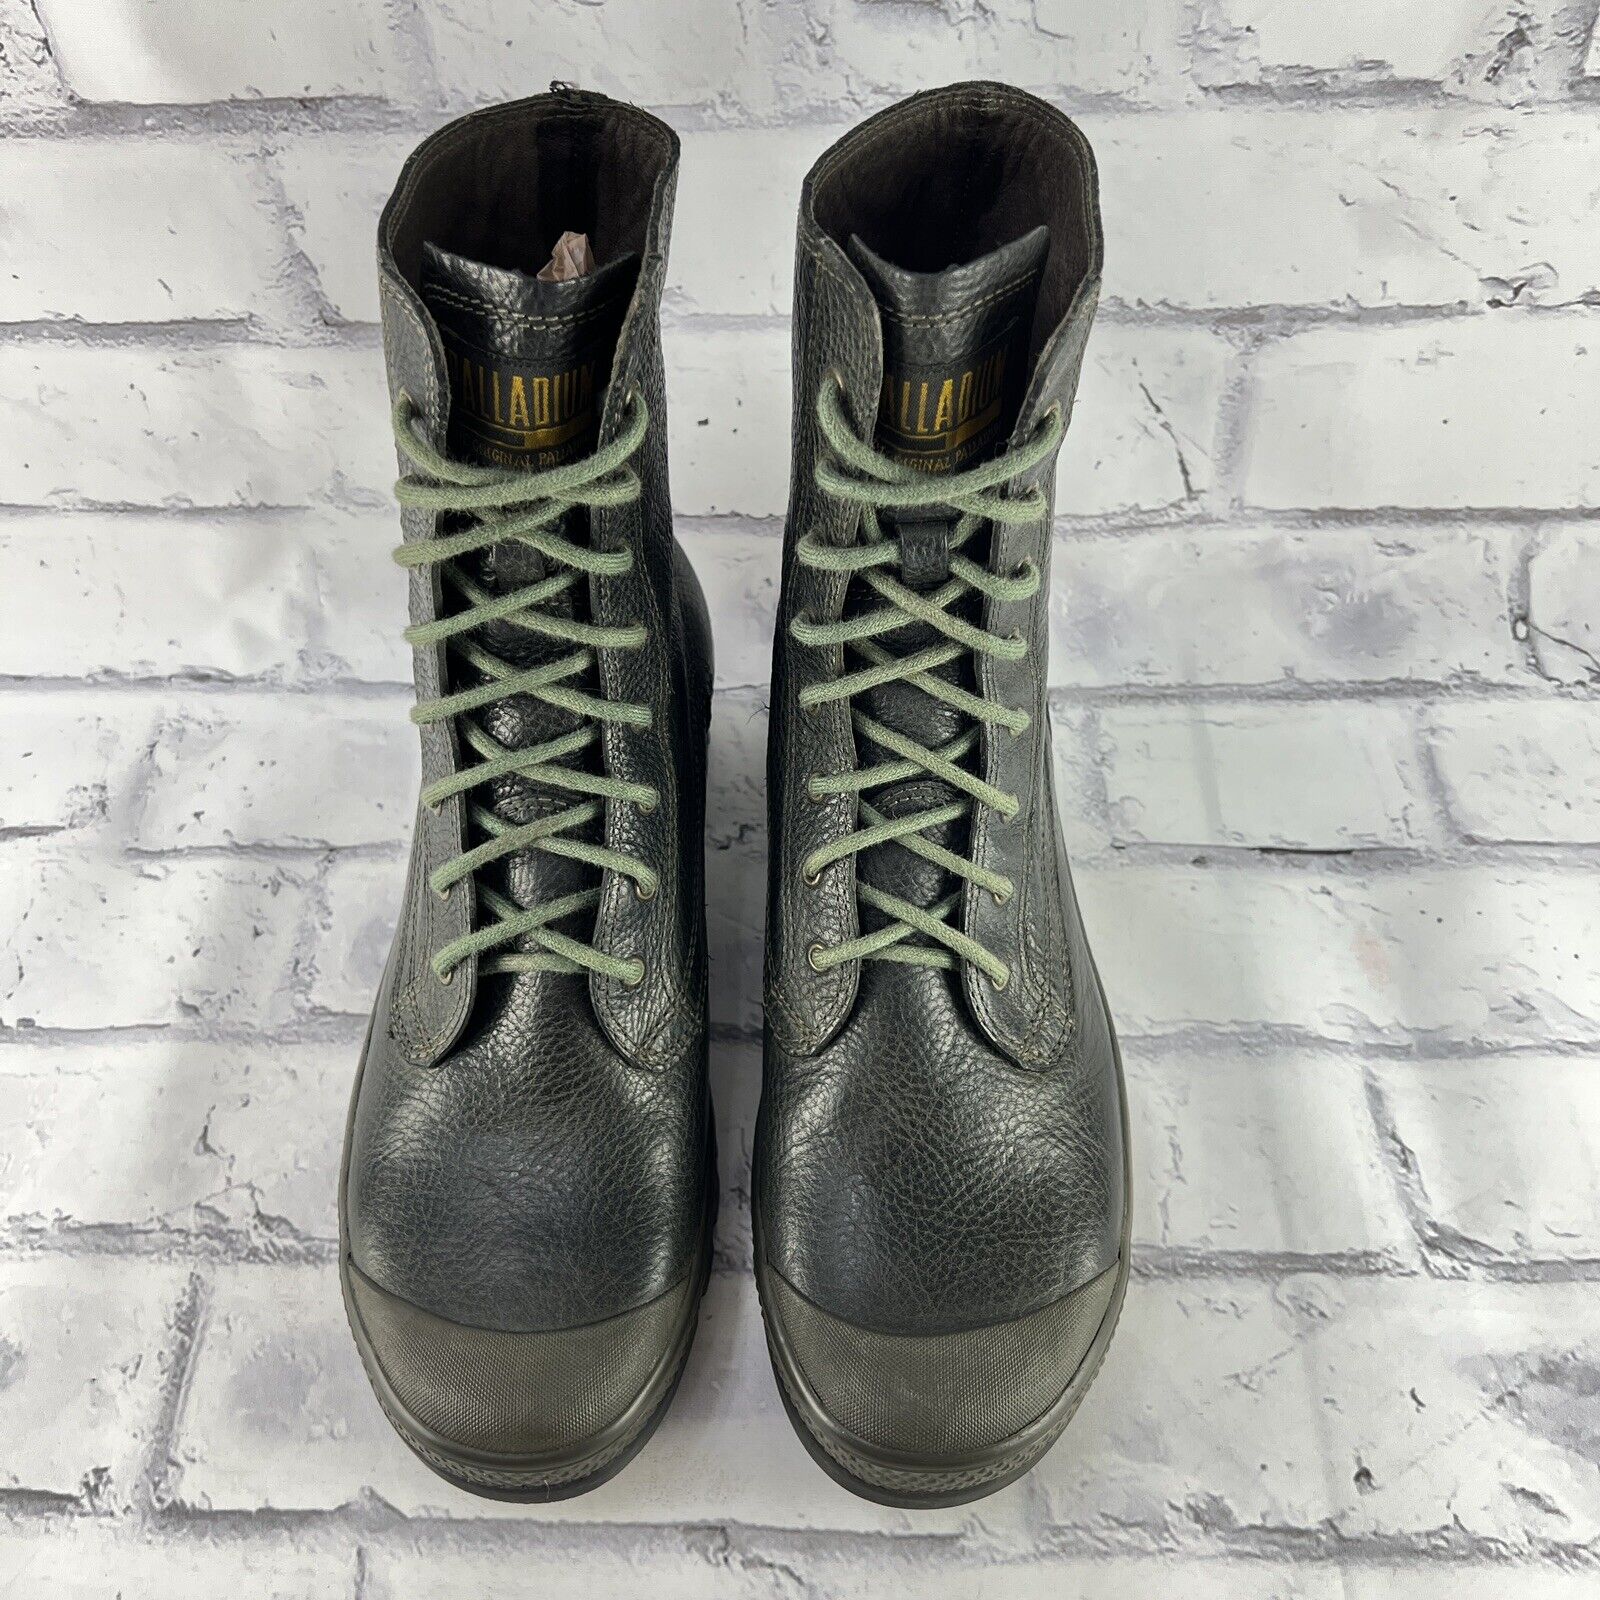 Palladium Pallabase Leather Women's Boots Sz US 8 EU 39 Dark Olive Green Combat